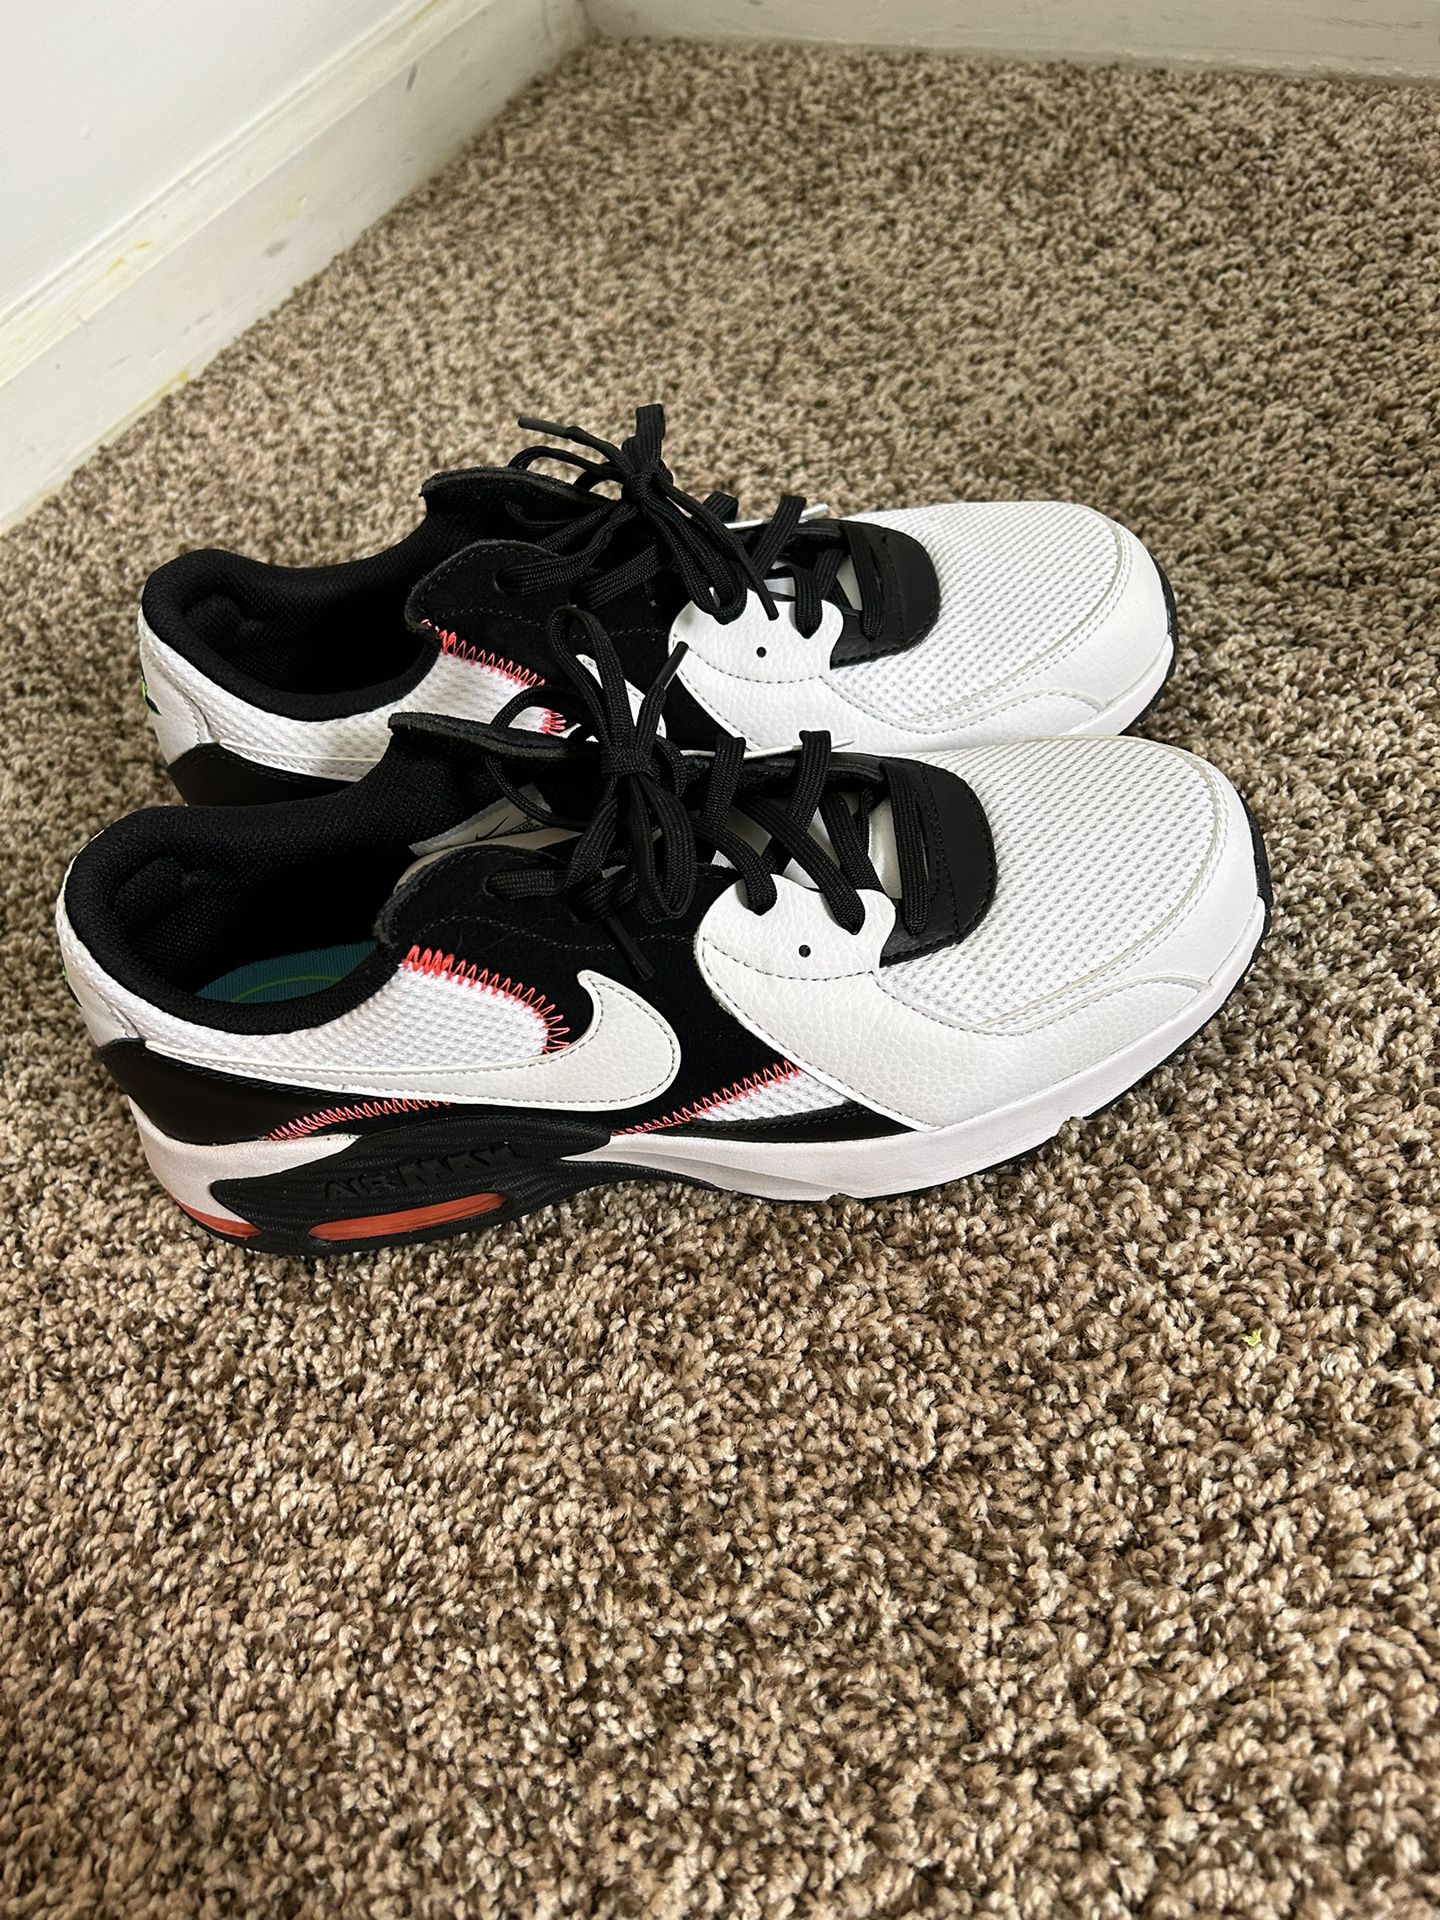 Men’s Nike Shoes 